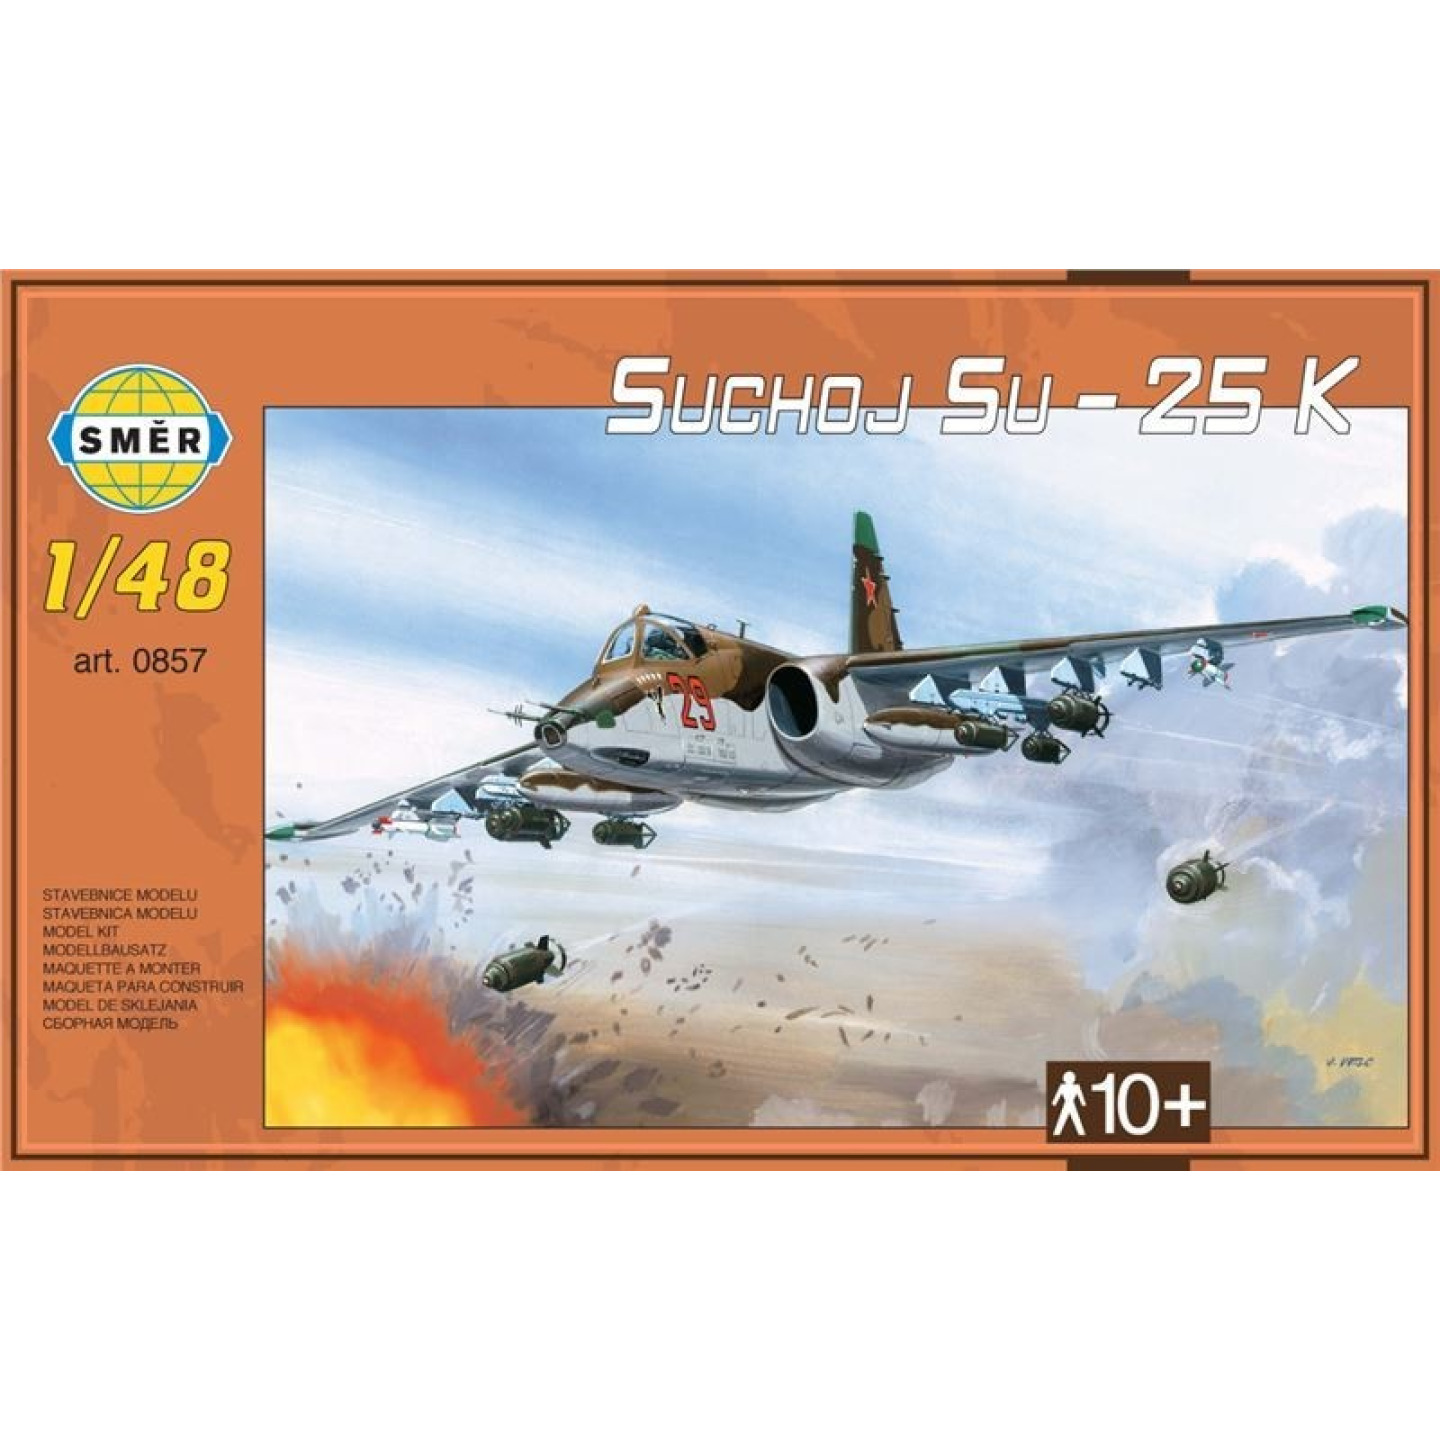 Suchoj SU-25 K 1:48